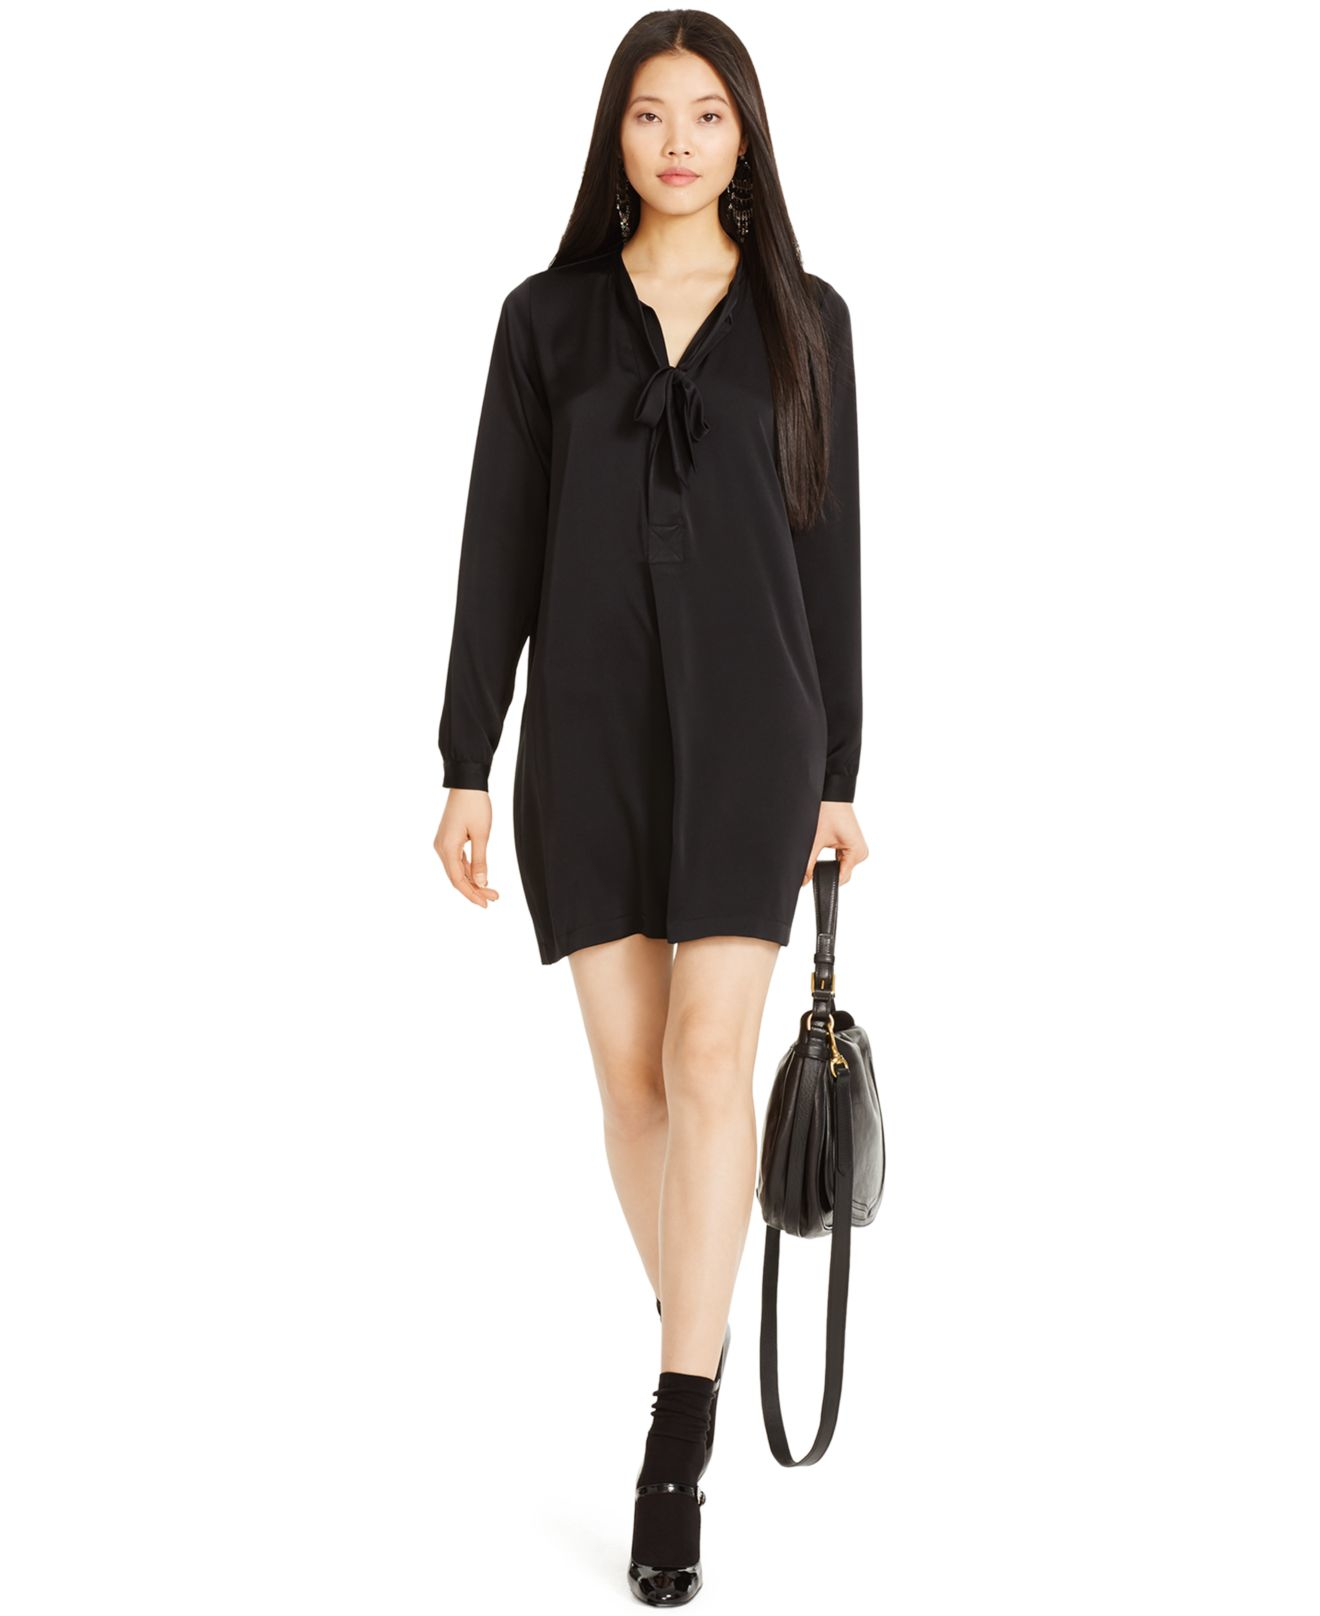 Lyst - Polo Ralph Lauren Long-sleeve Tunic Dress in Black